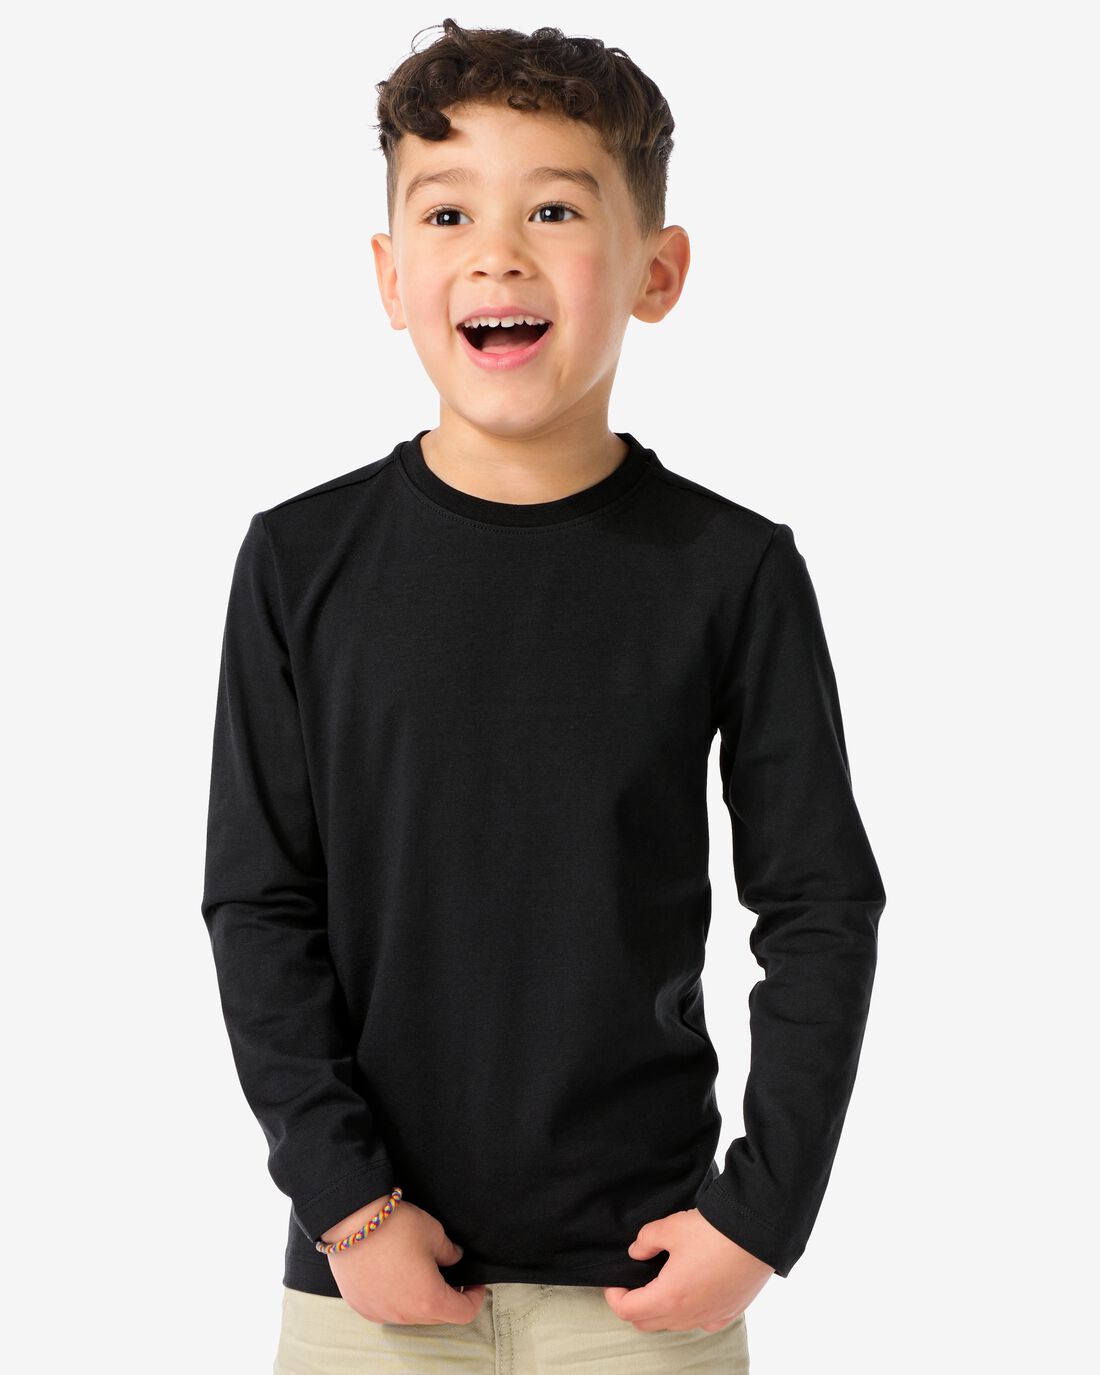 HEMA Kinder Basis T-shirts Stretch Katoen 2 Stuks Zwart (zwart)